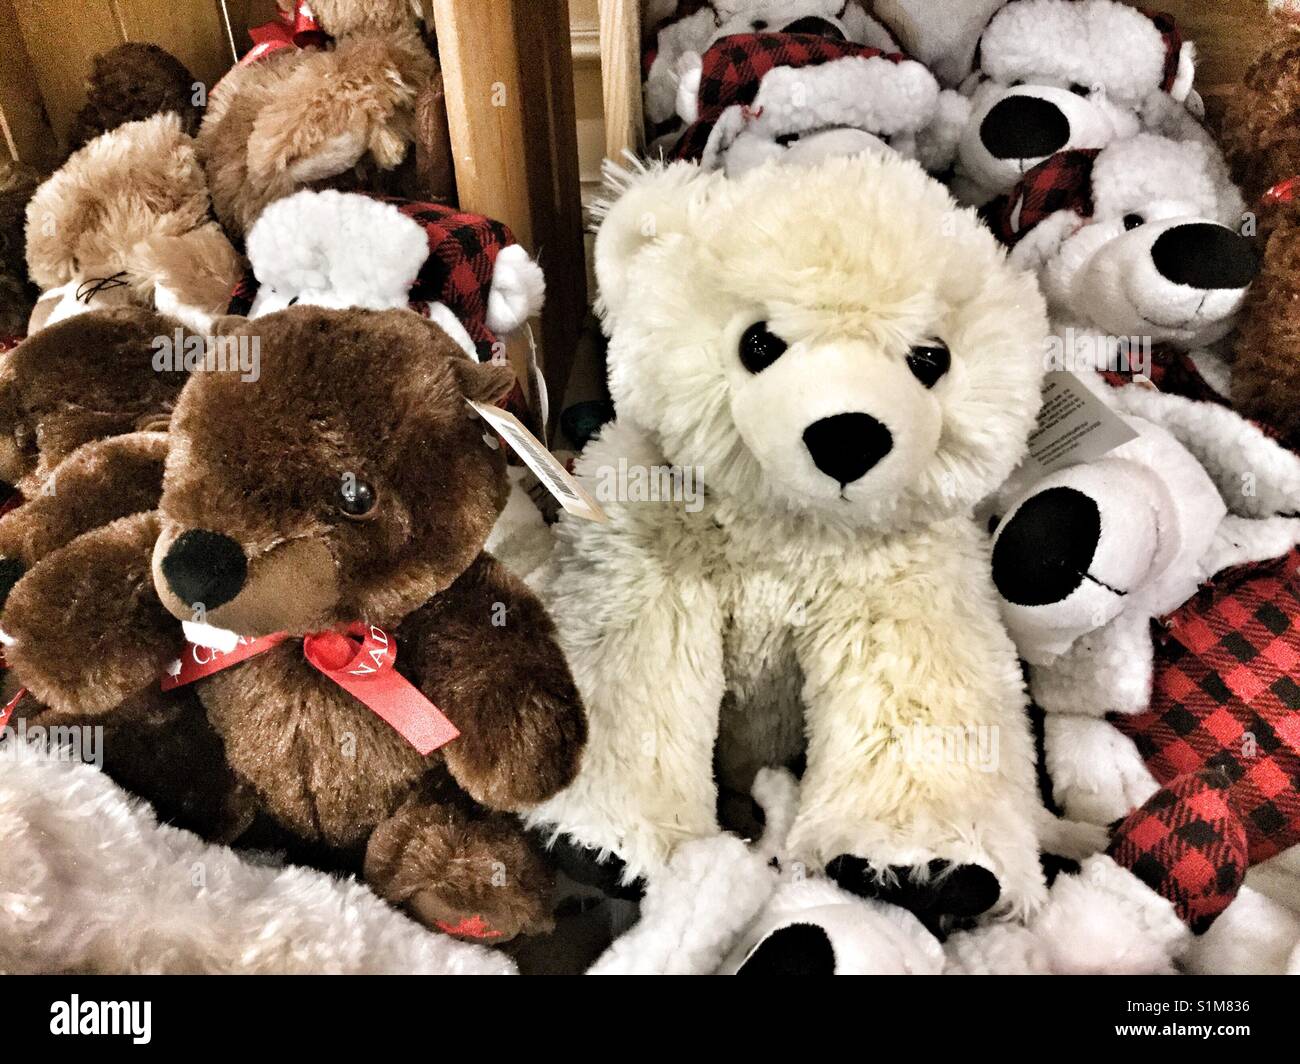 Stuffed animals in a souvenir shop Stock Photo - Alamy